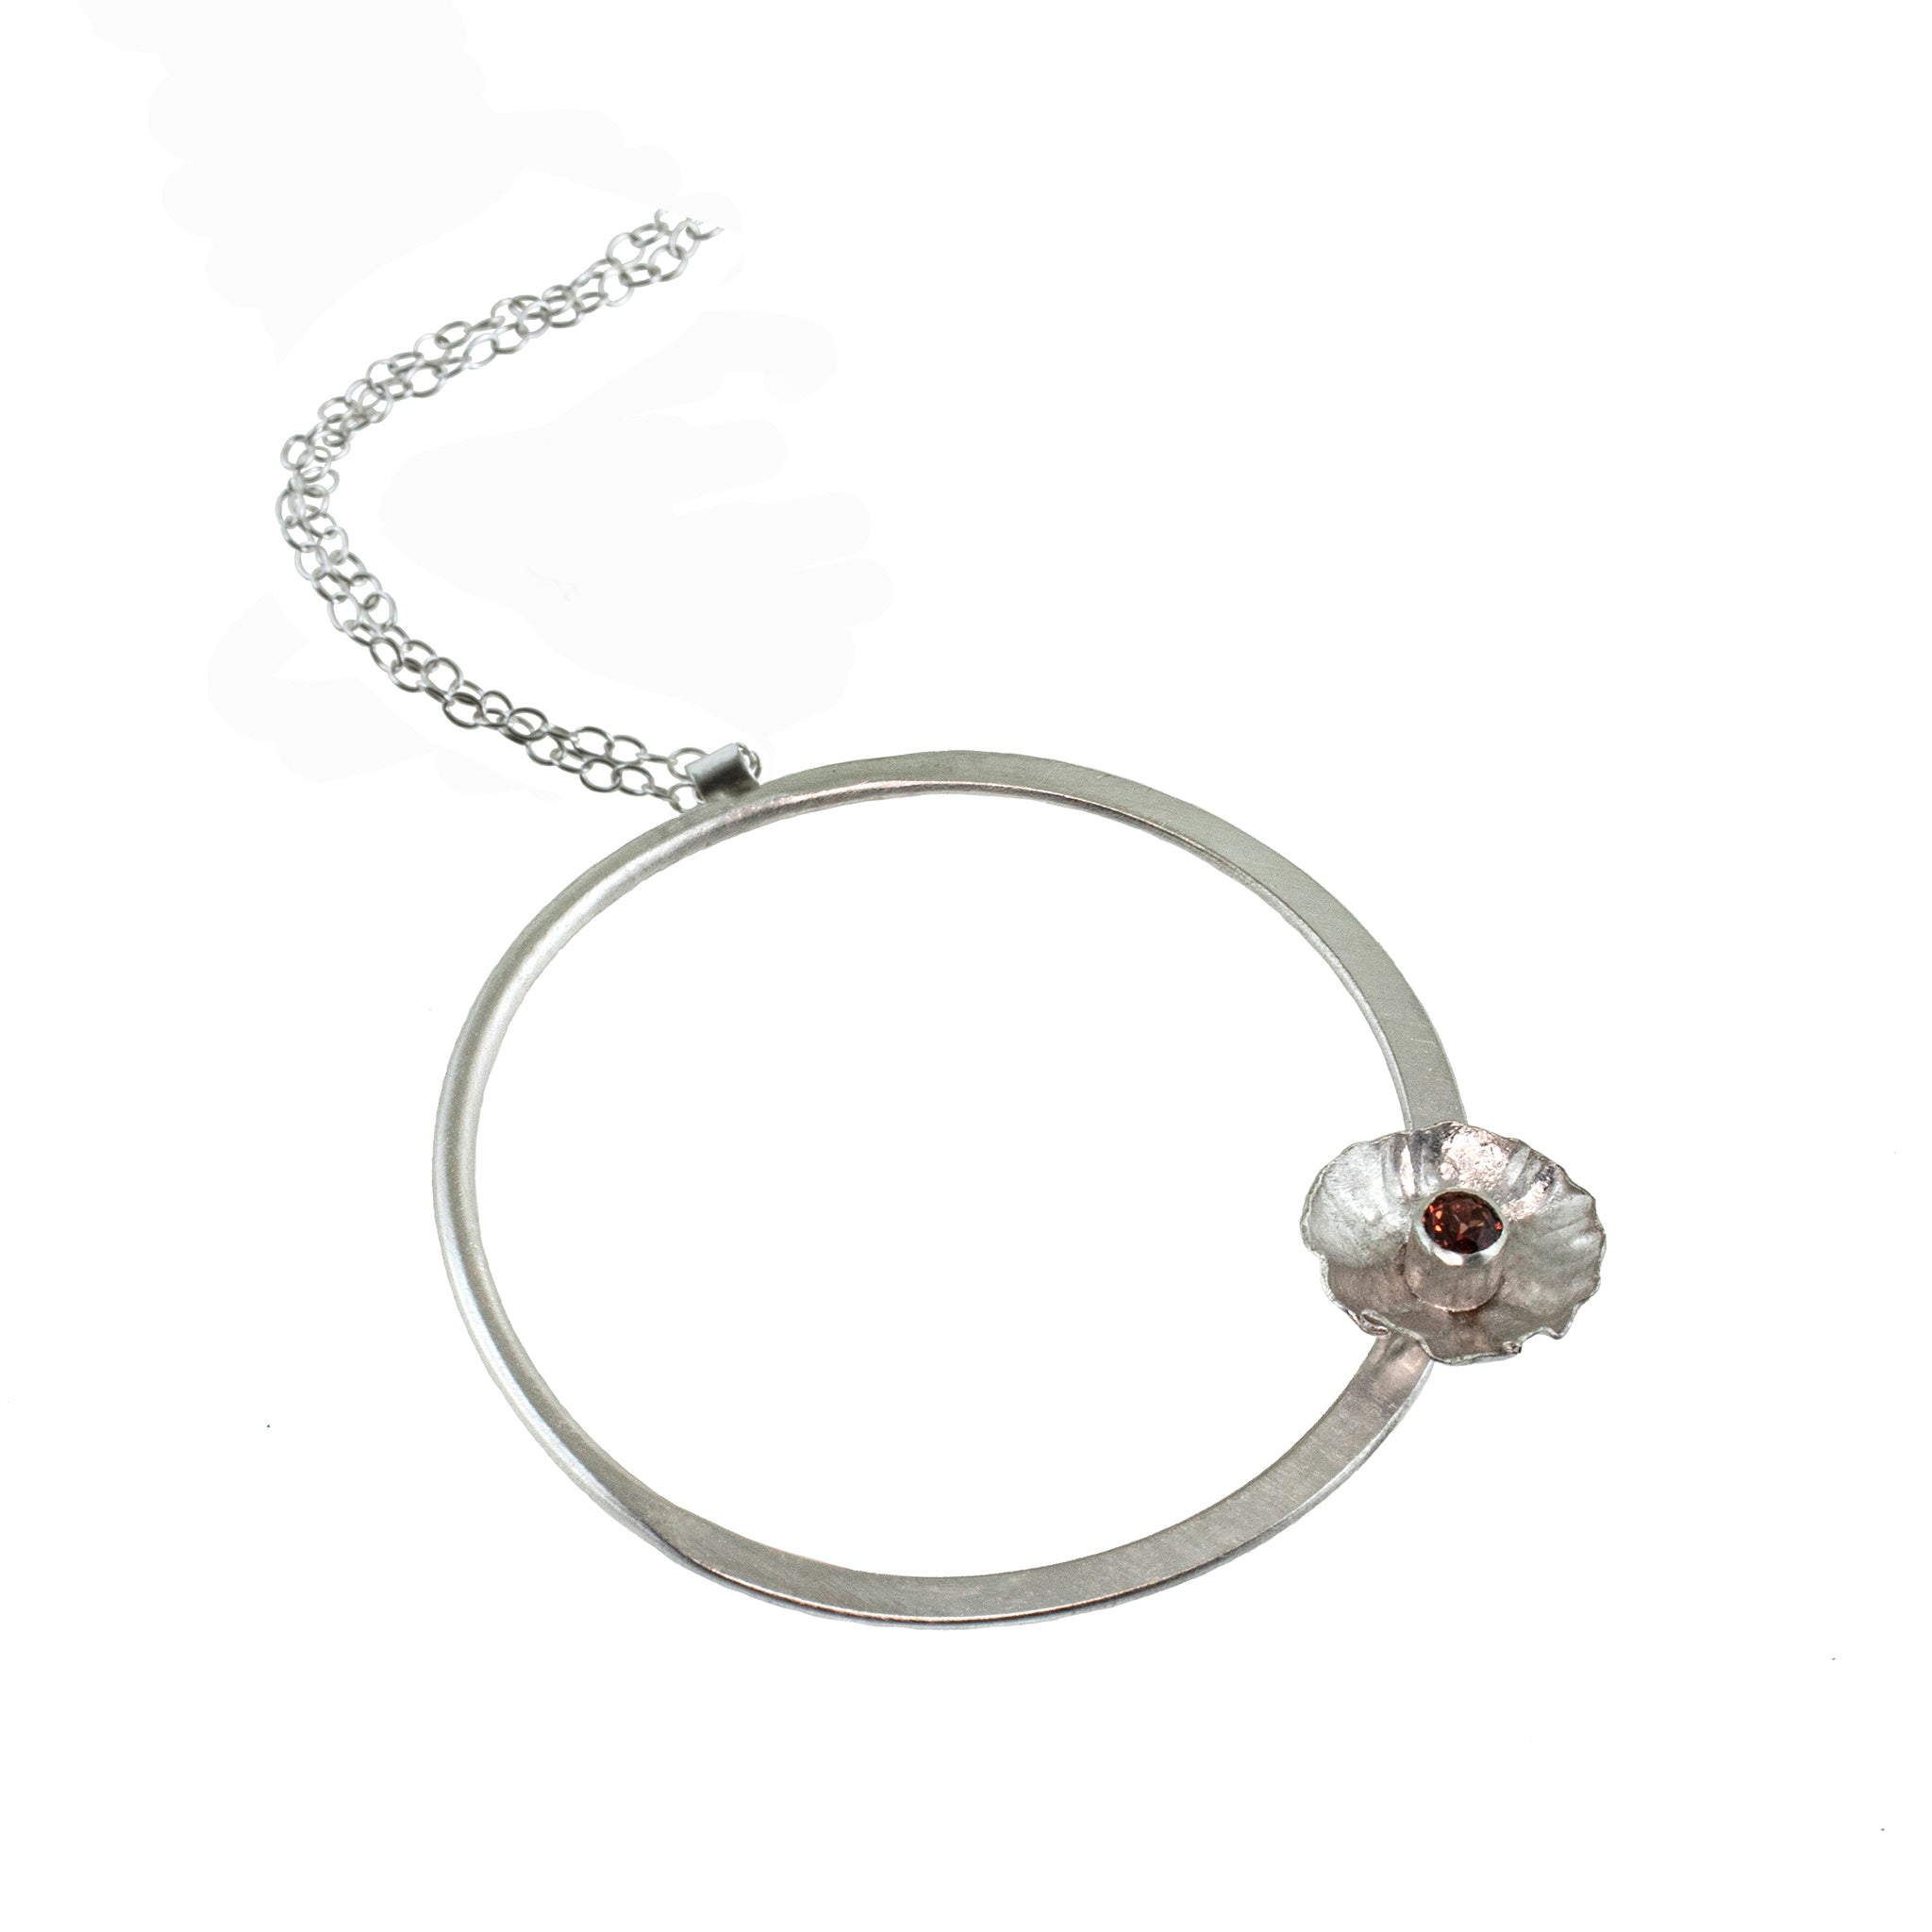 .silver flower hoop necklace with garnet by eko jewelry design, Cleanthe.